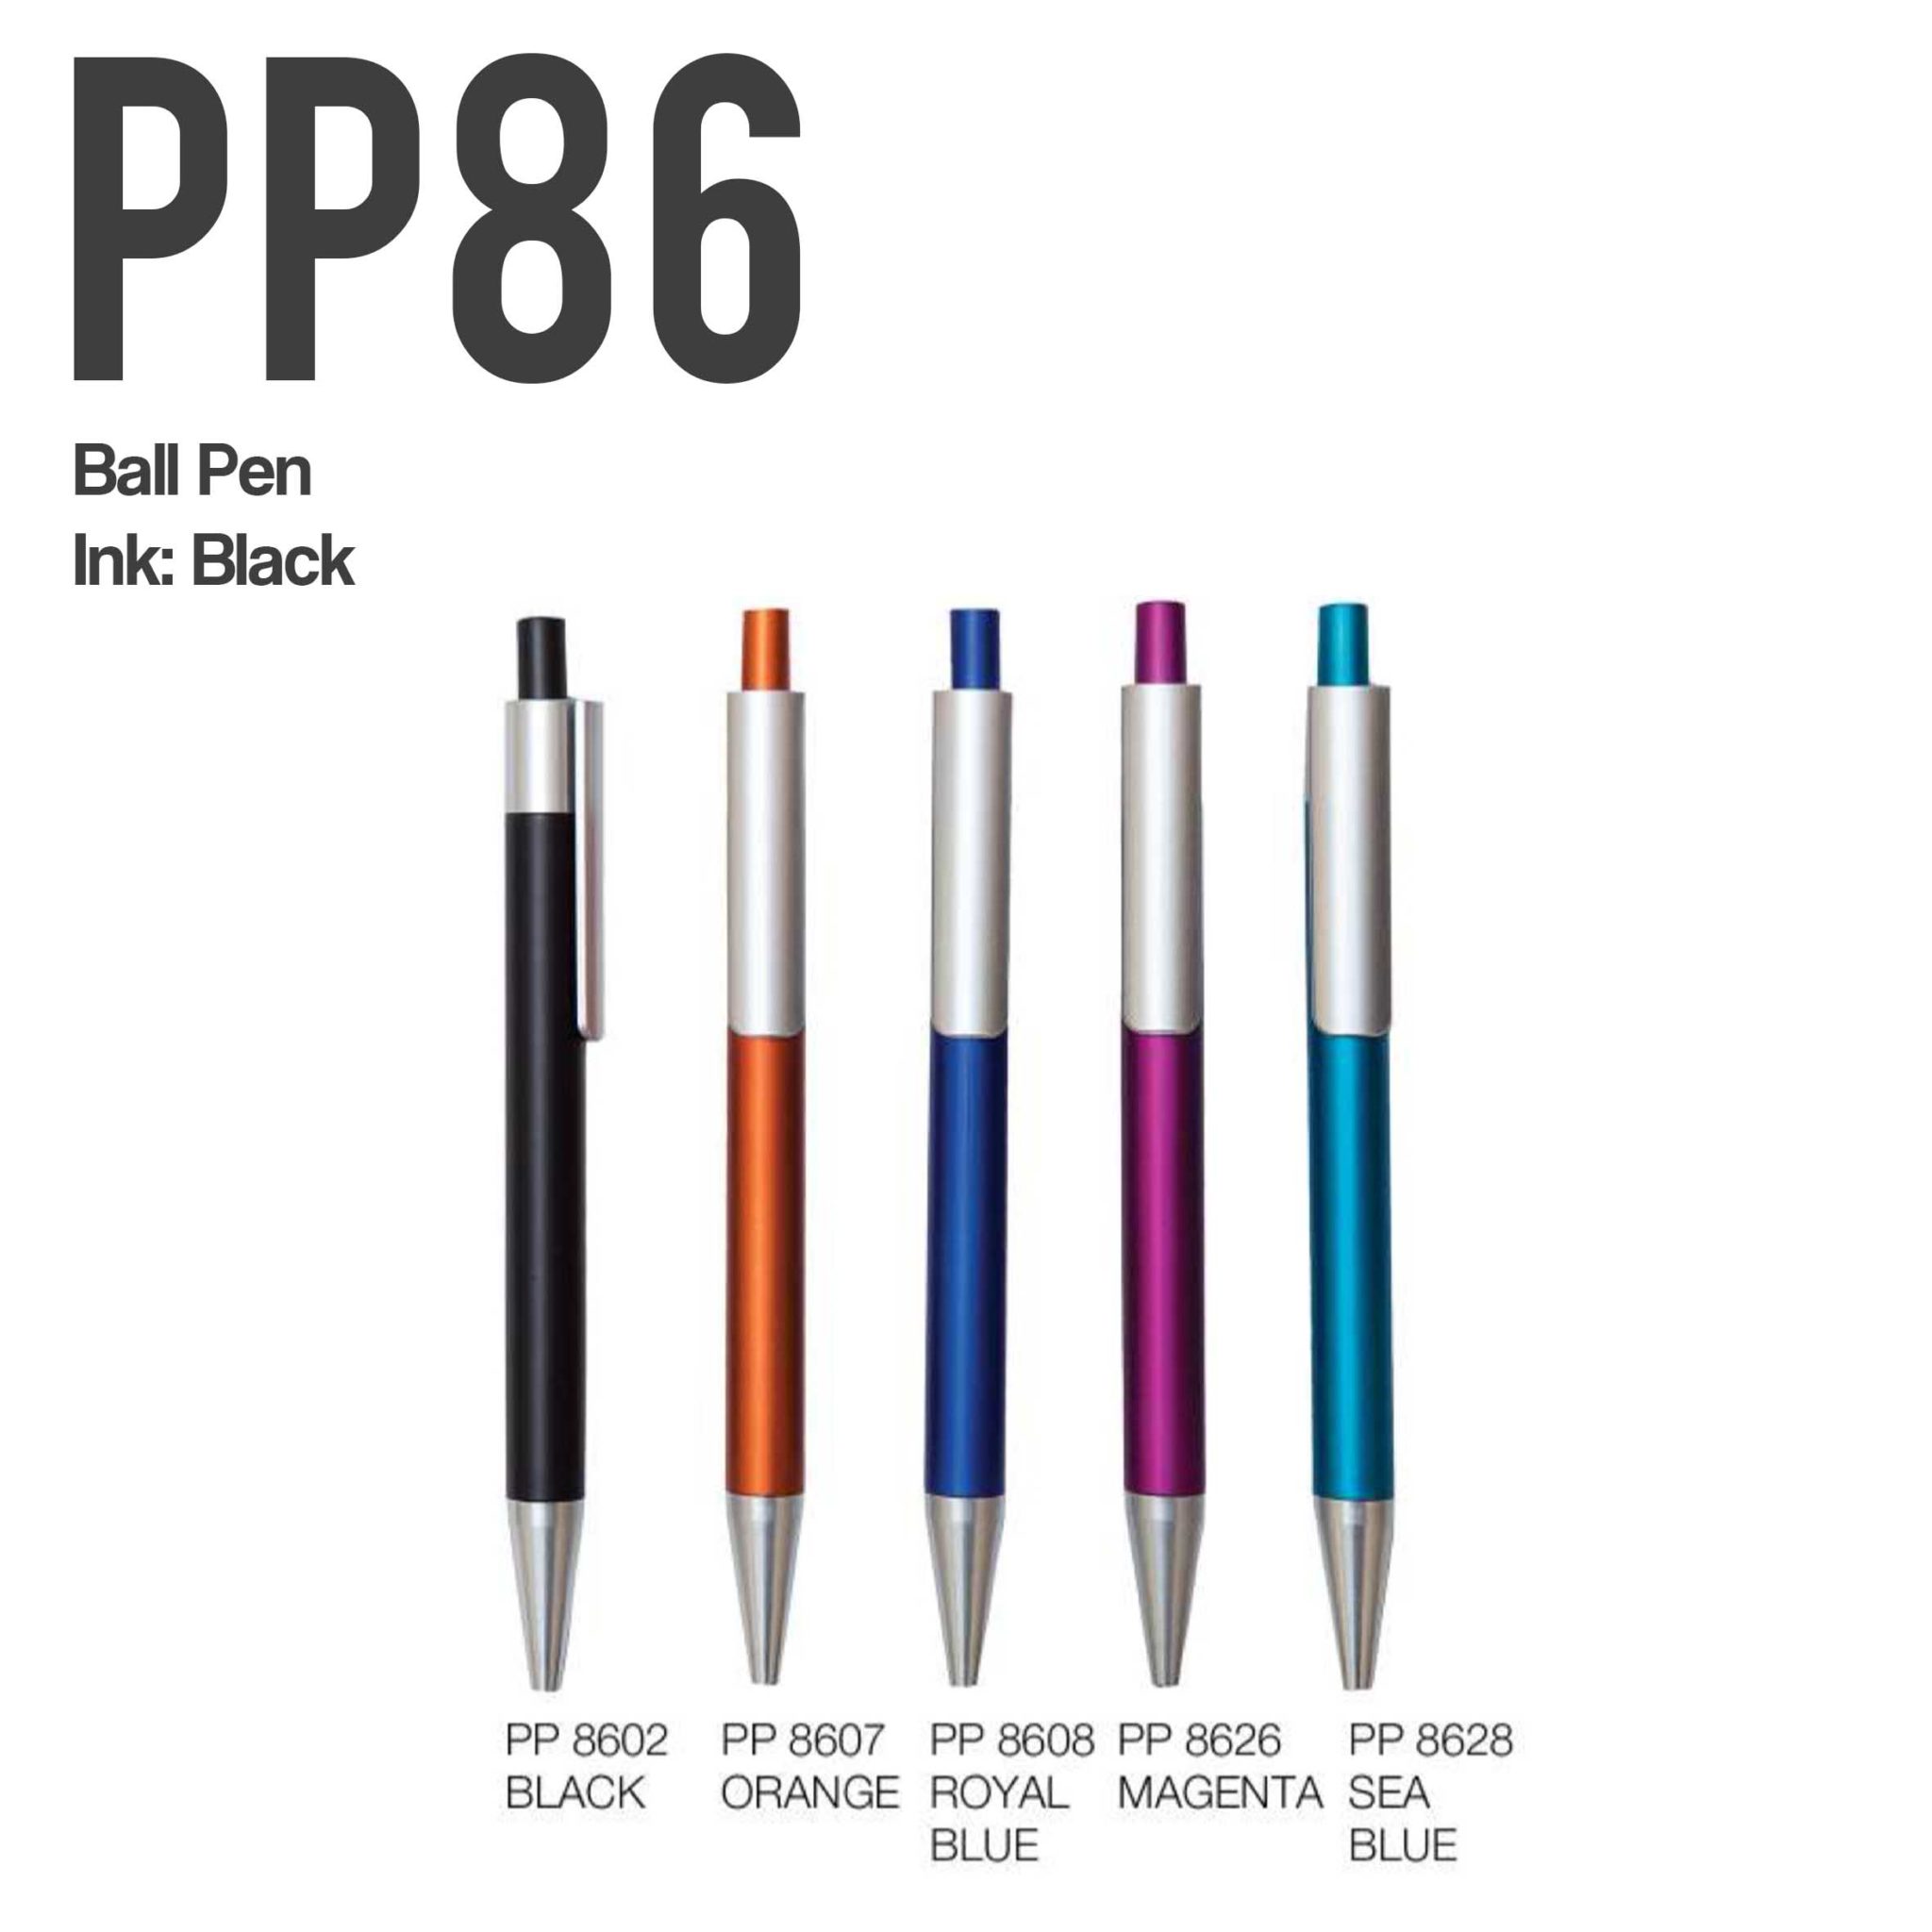 PP86 plastic pen scaled